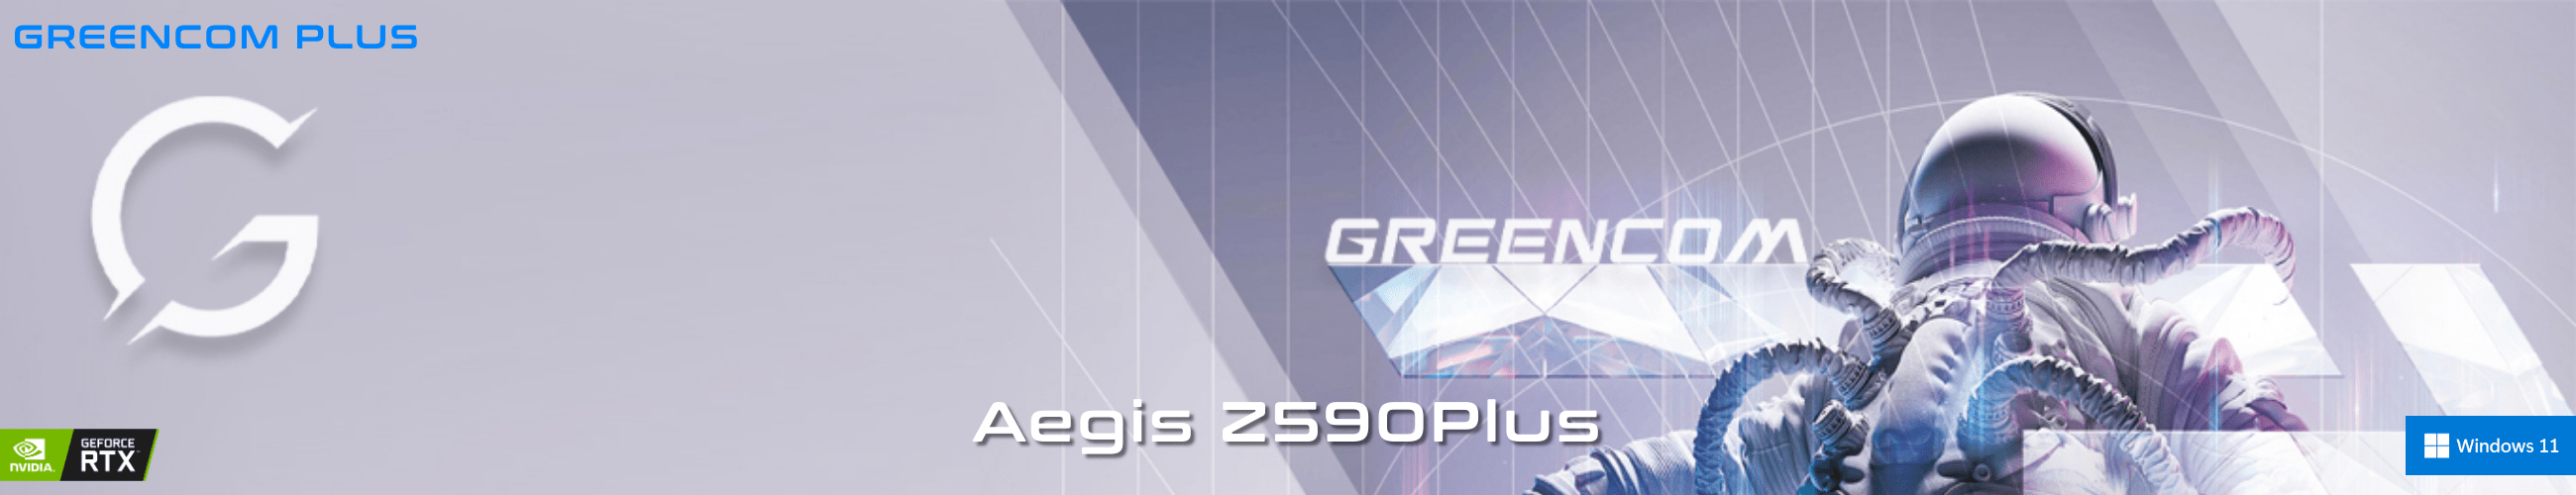 Greencom Aegis Z590Plus Laptop